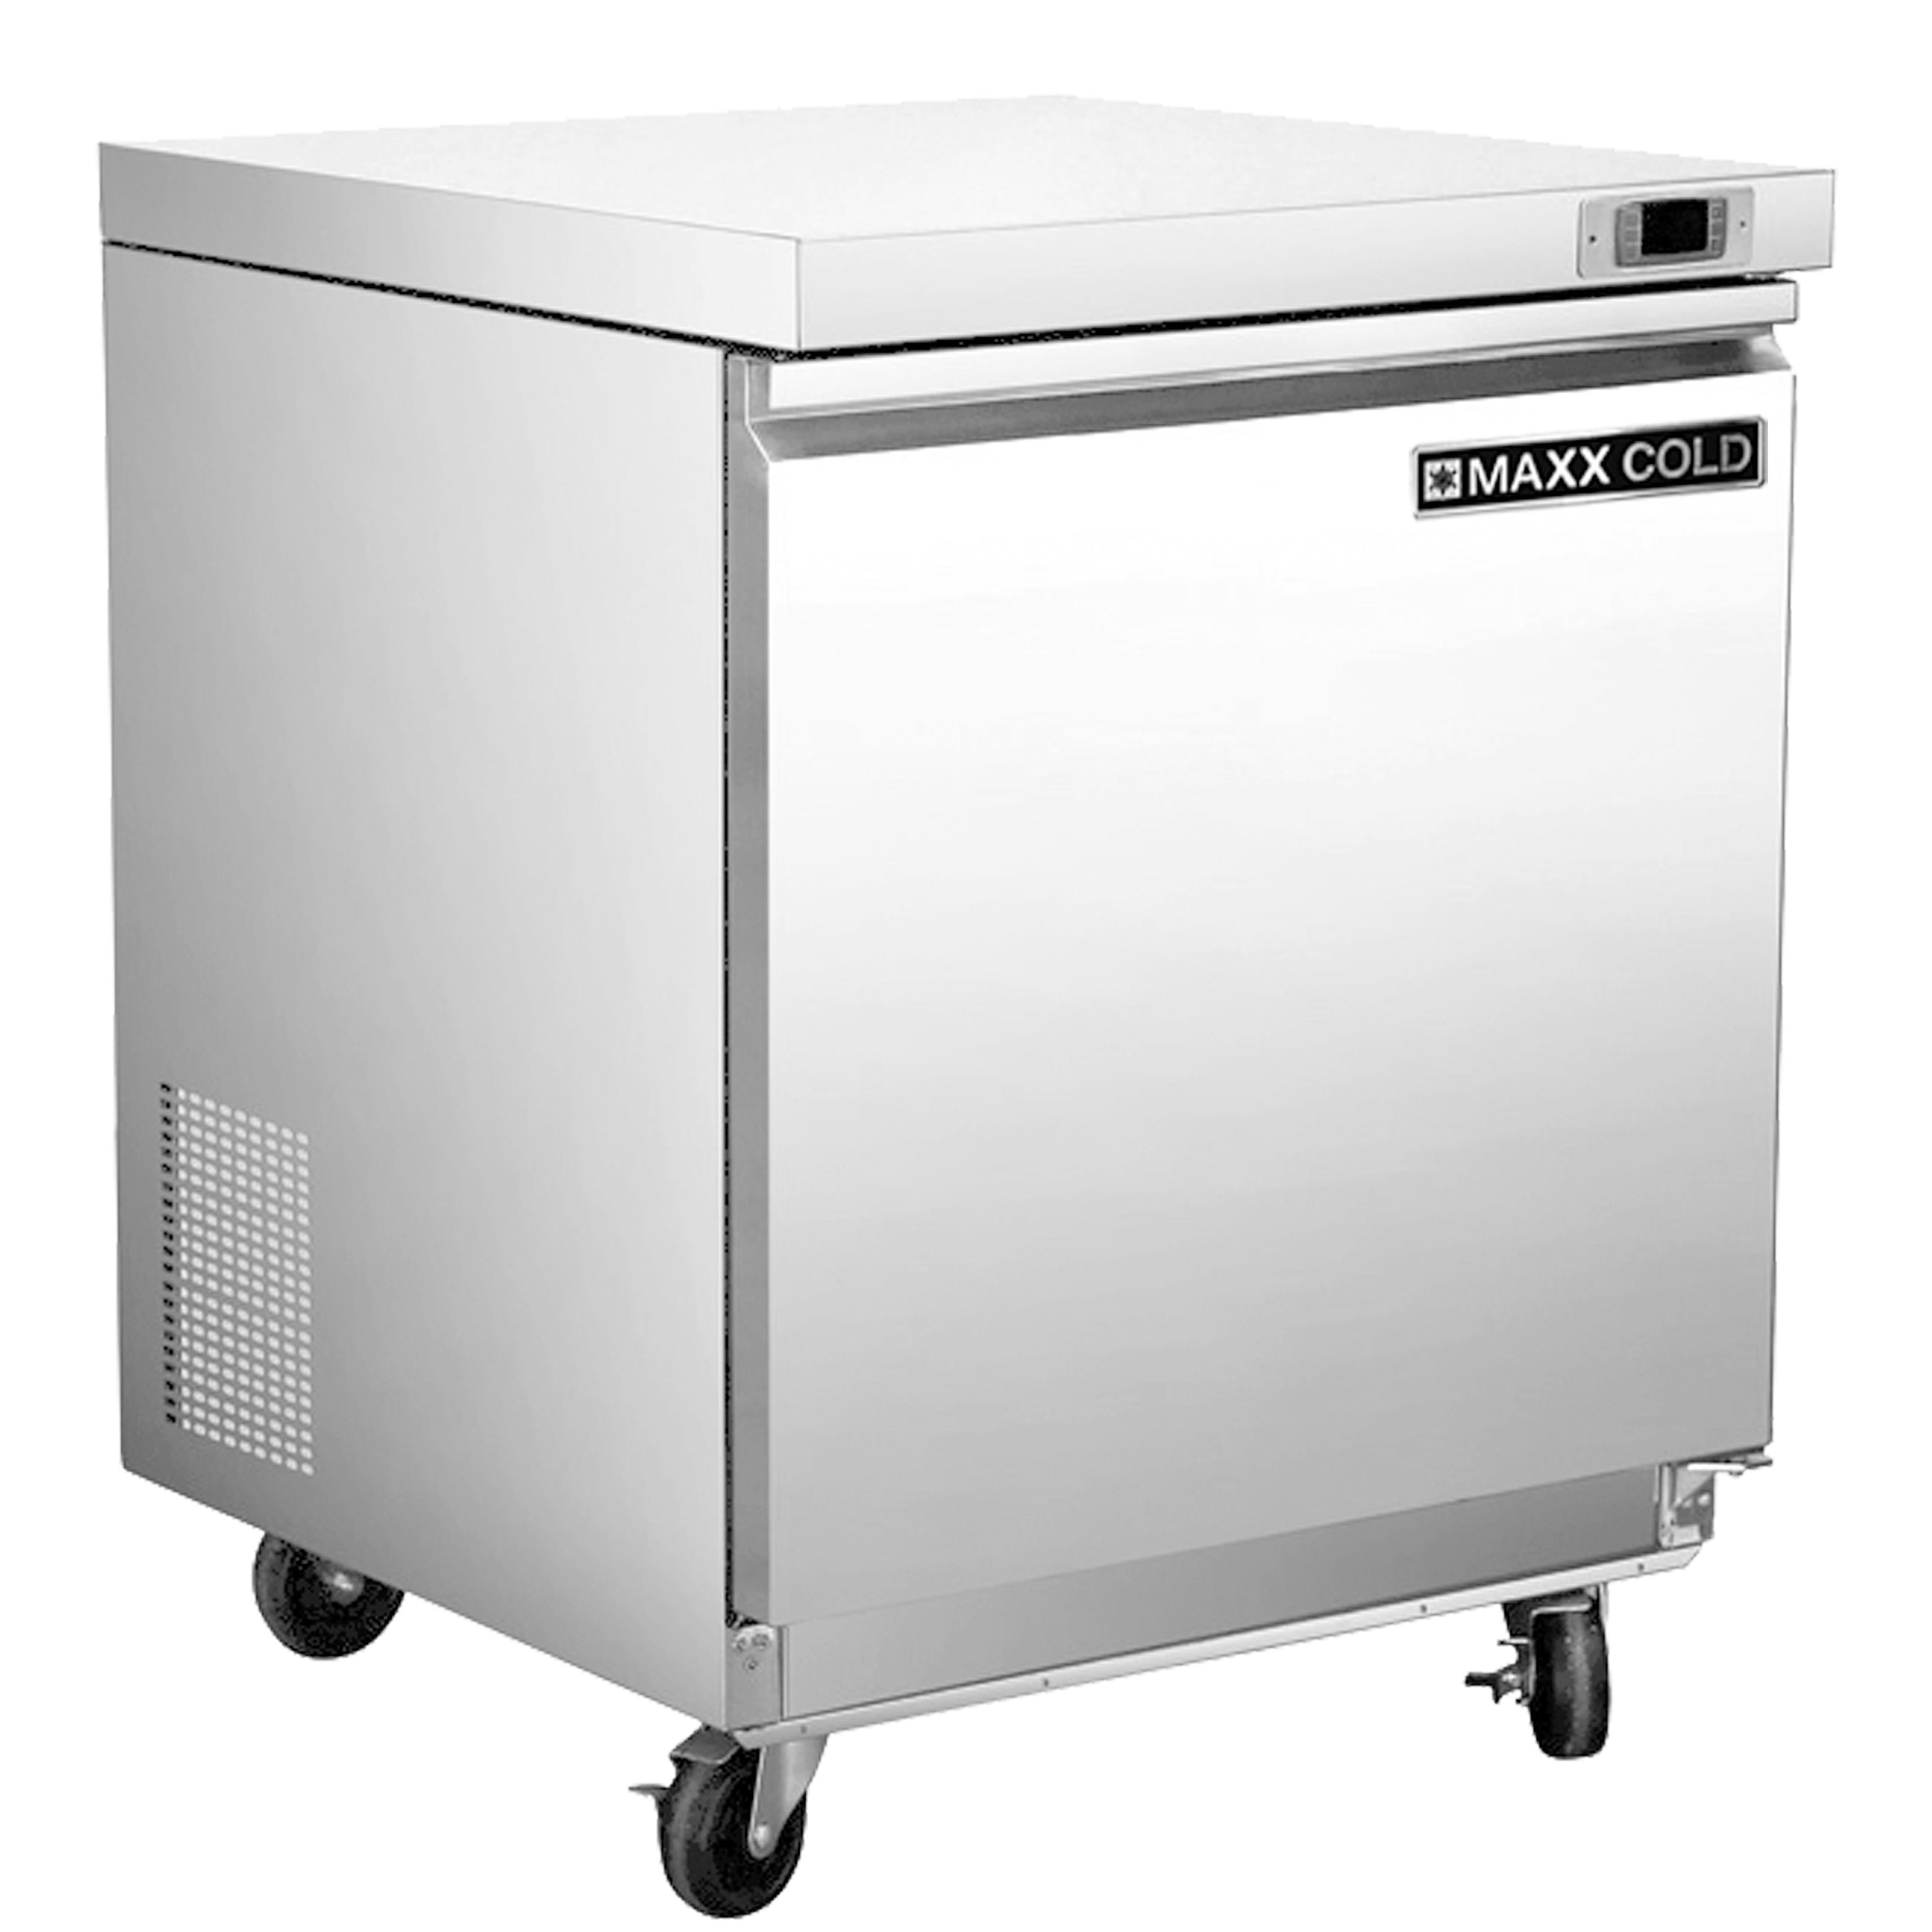 Maxx Cold - MXSF29UHC, Maxx Cold Single Door Undercounter Freezer, 27.5"W, 6.7 cu. ft. Storage Capacity, in Stainless Steel